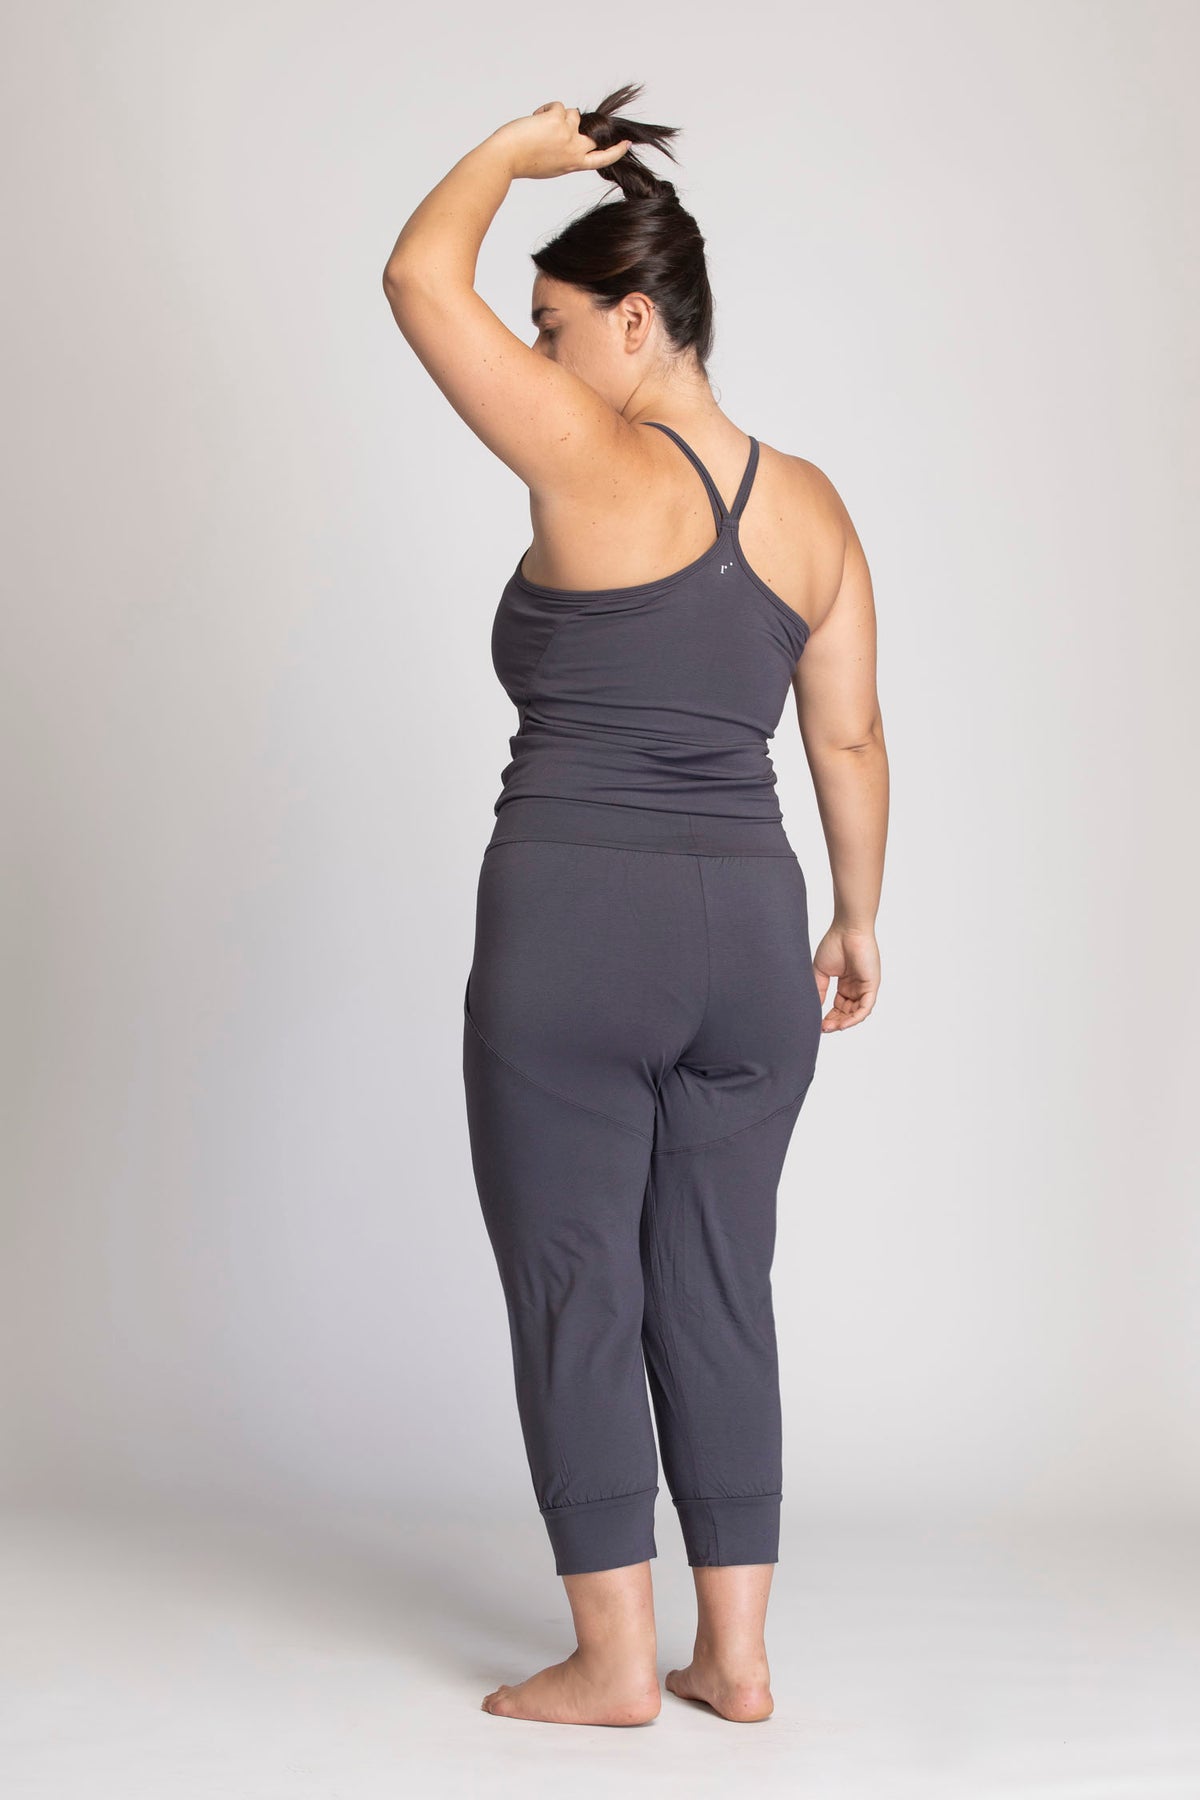 Yoga Jumpsuit womens clothing Ripple Yoga Wear steel